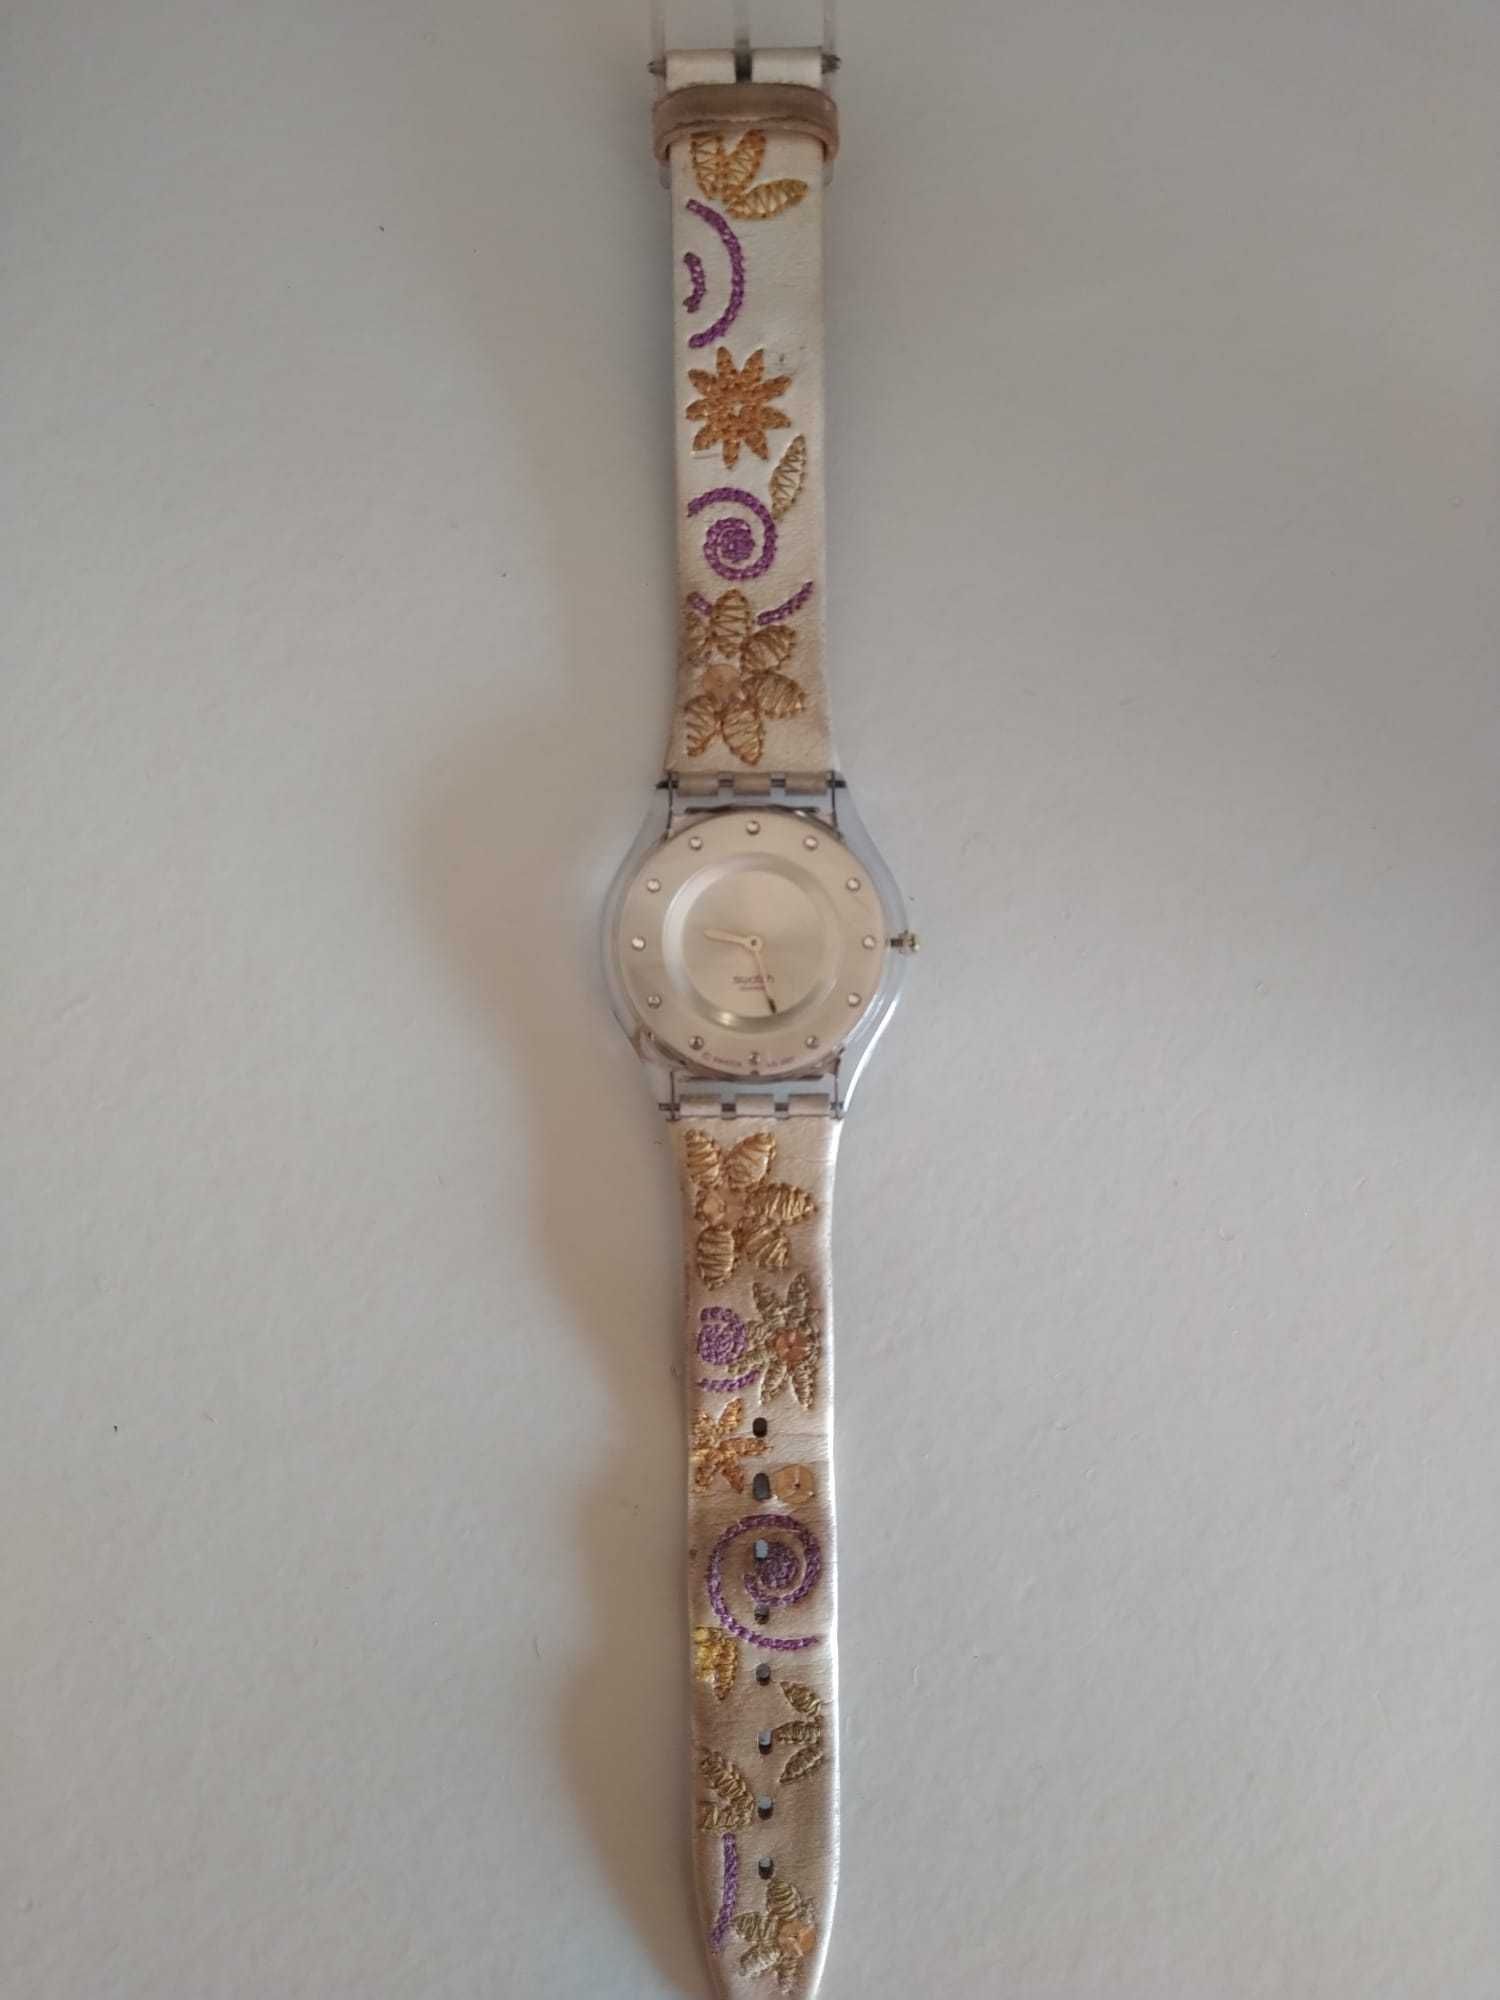 Relógio Swatch original